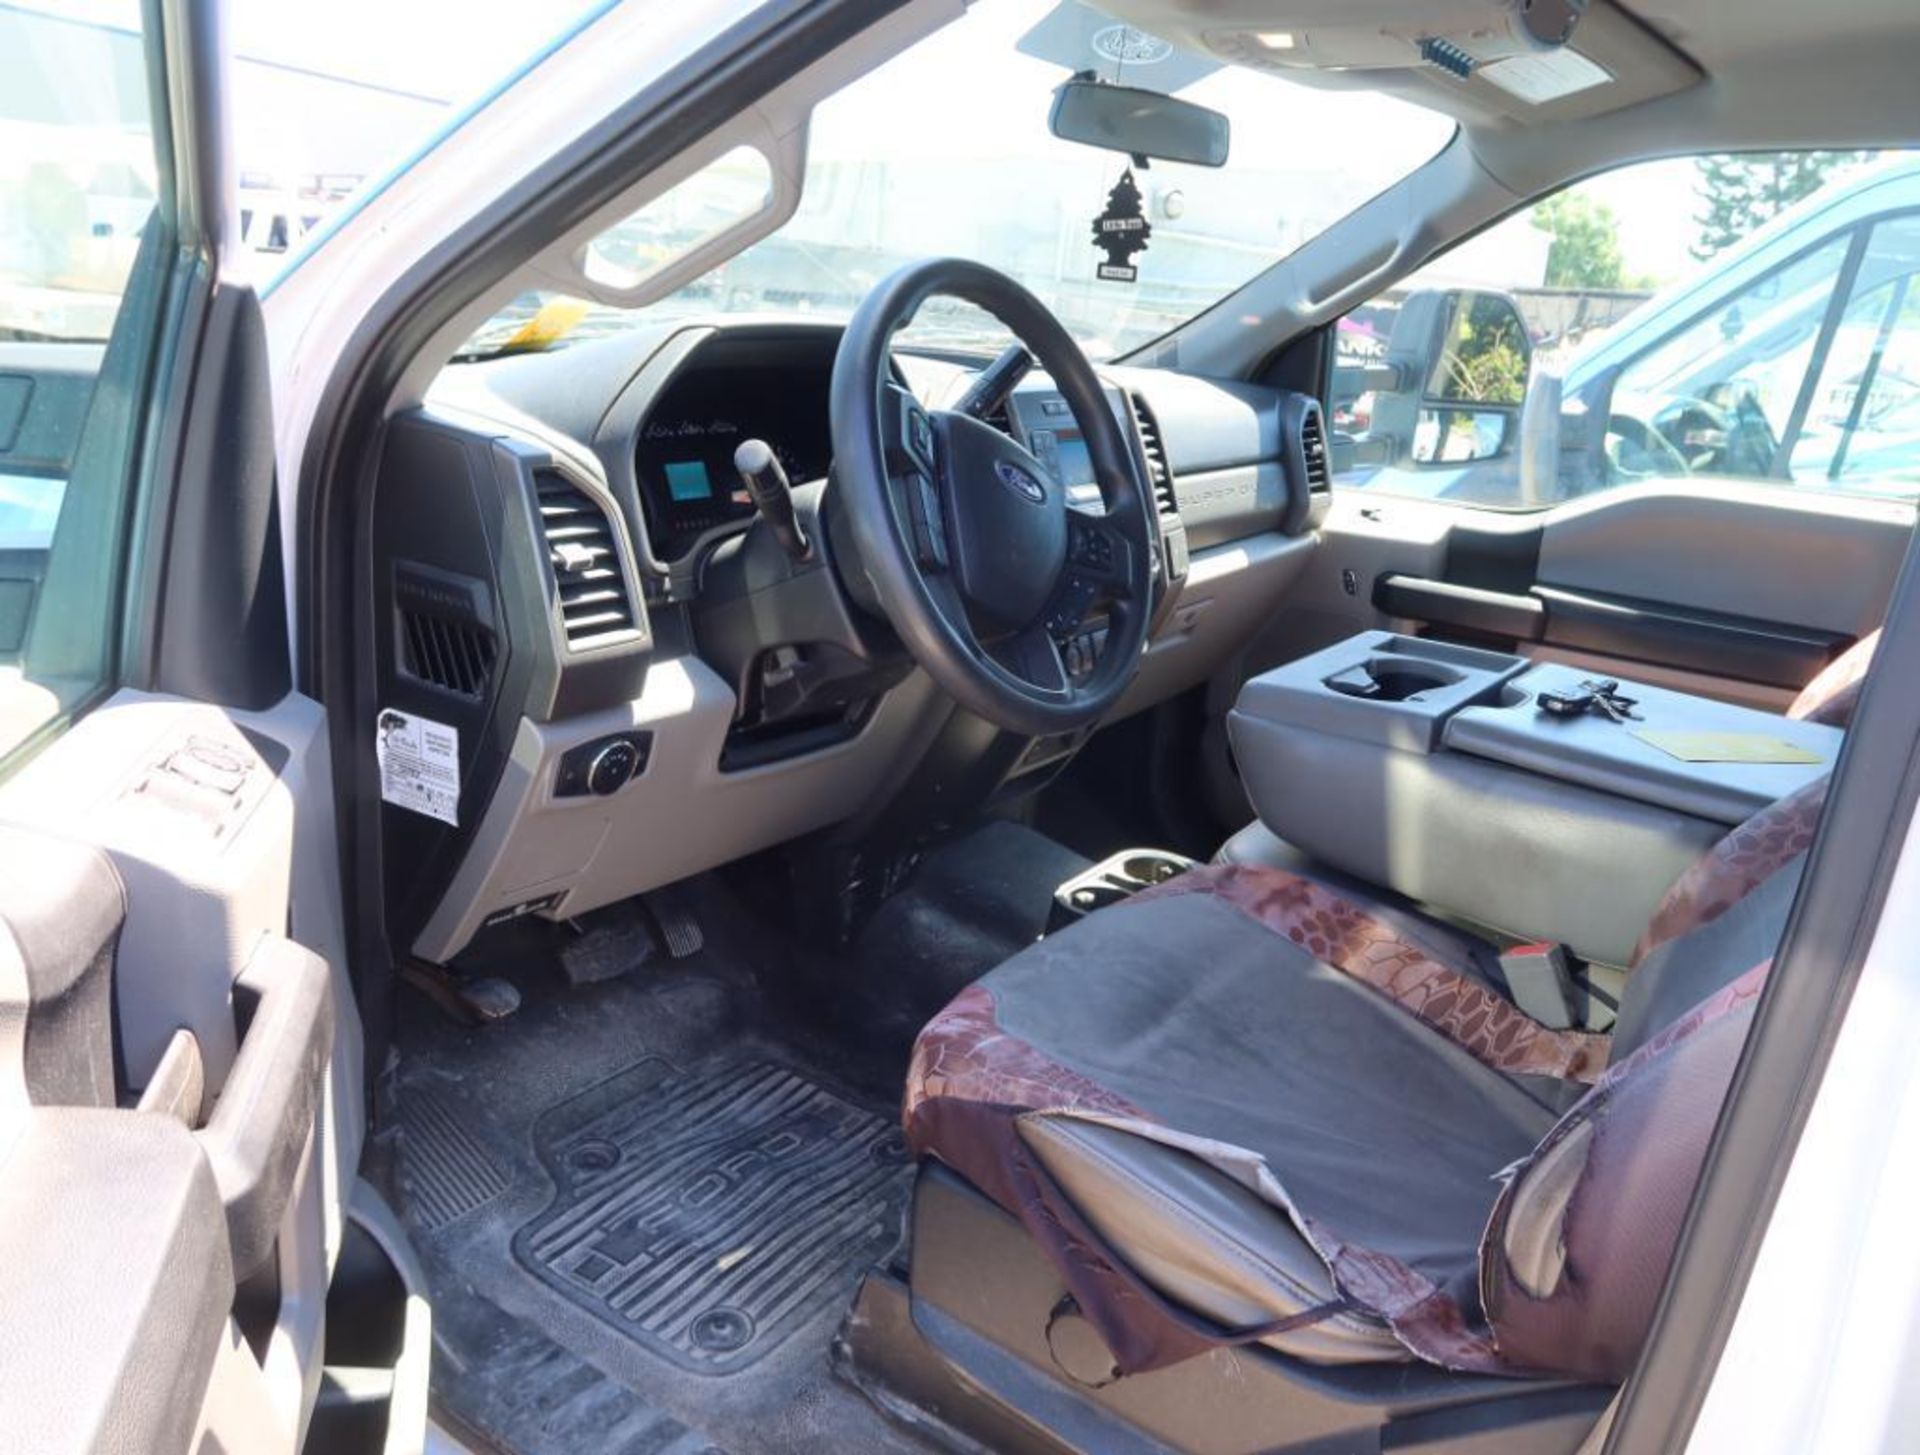 2019 Ford 4WD Crew Cab F-550 Super Duty Flat Bed, Dual Wheel w/Tool Box, Diesel, License# NPW-I96, V - Image 7 of 16